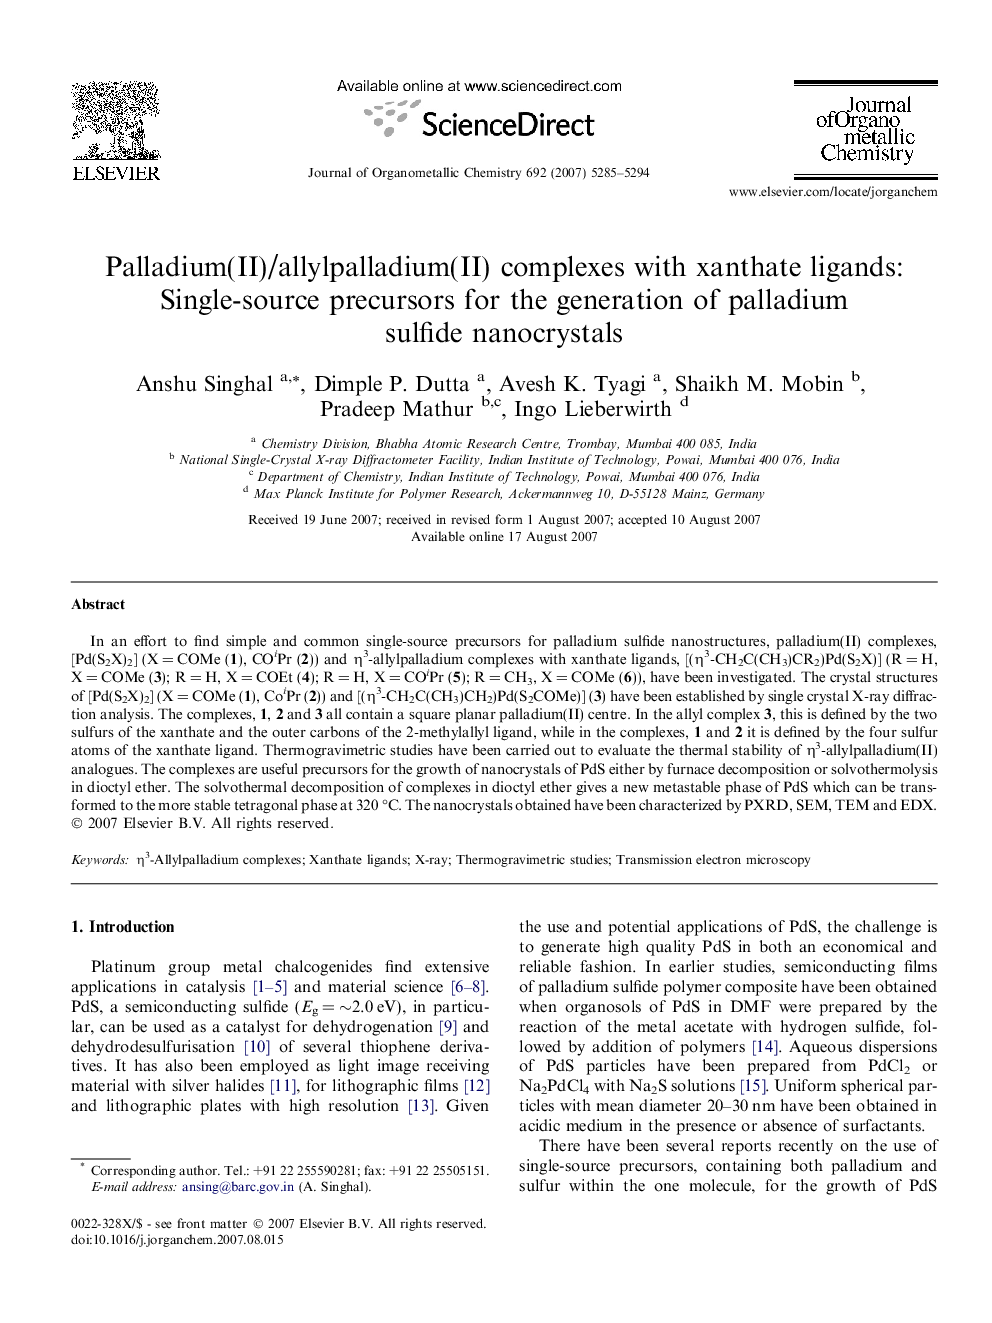 Palladium(II)/allylpalladium(II) complexes with xanthate ligands: Single-source precursors for the generation of palladium sulfide nanocrystals